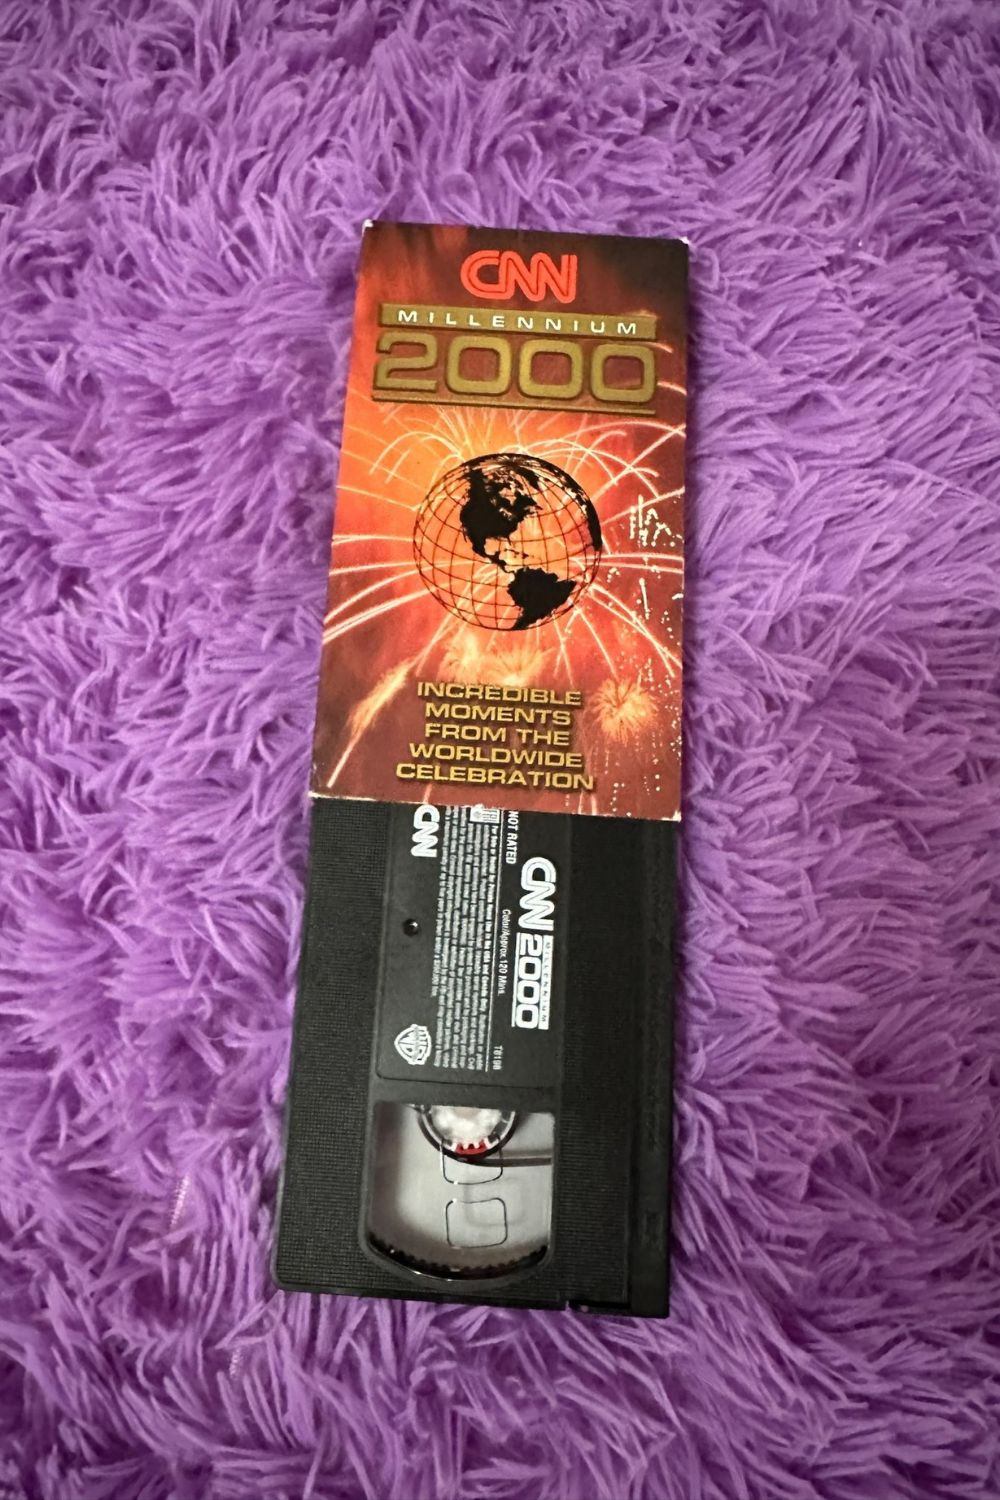 CNN MILLENNIUM 2000 VHS*